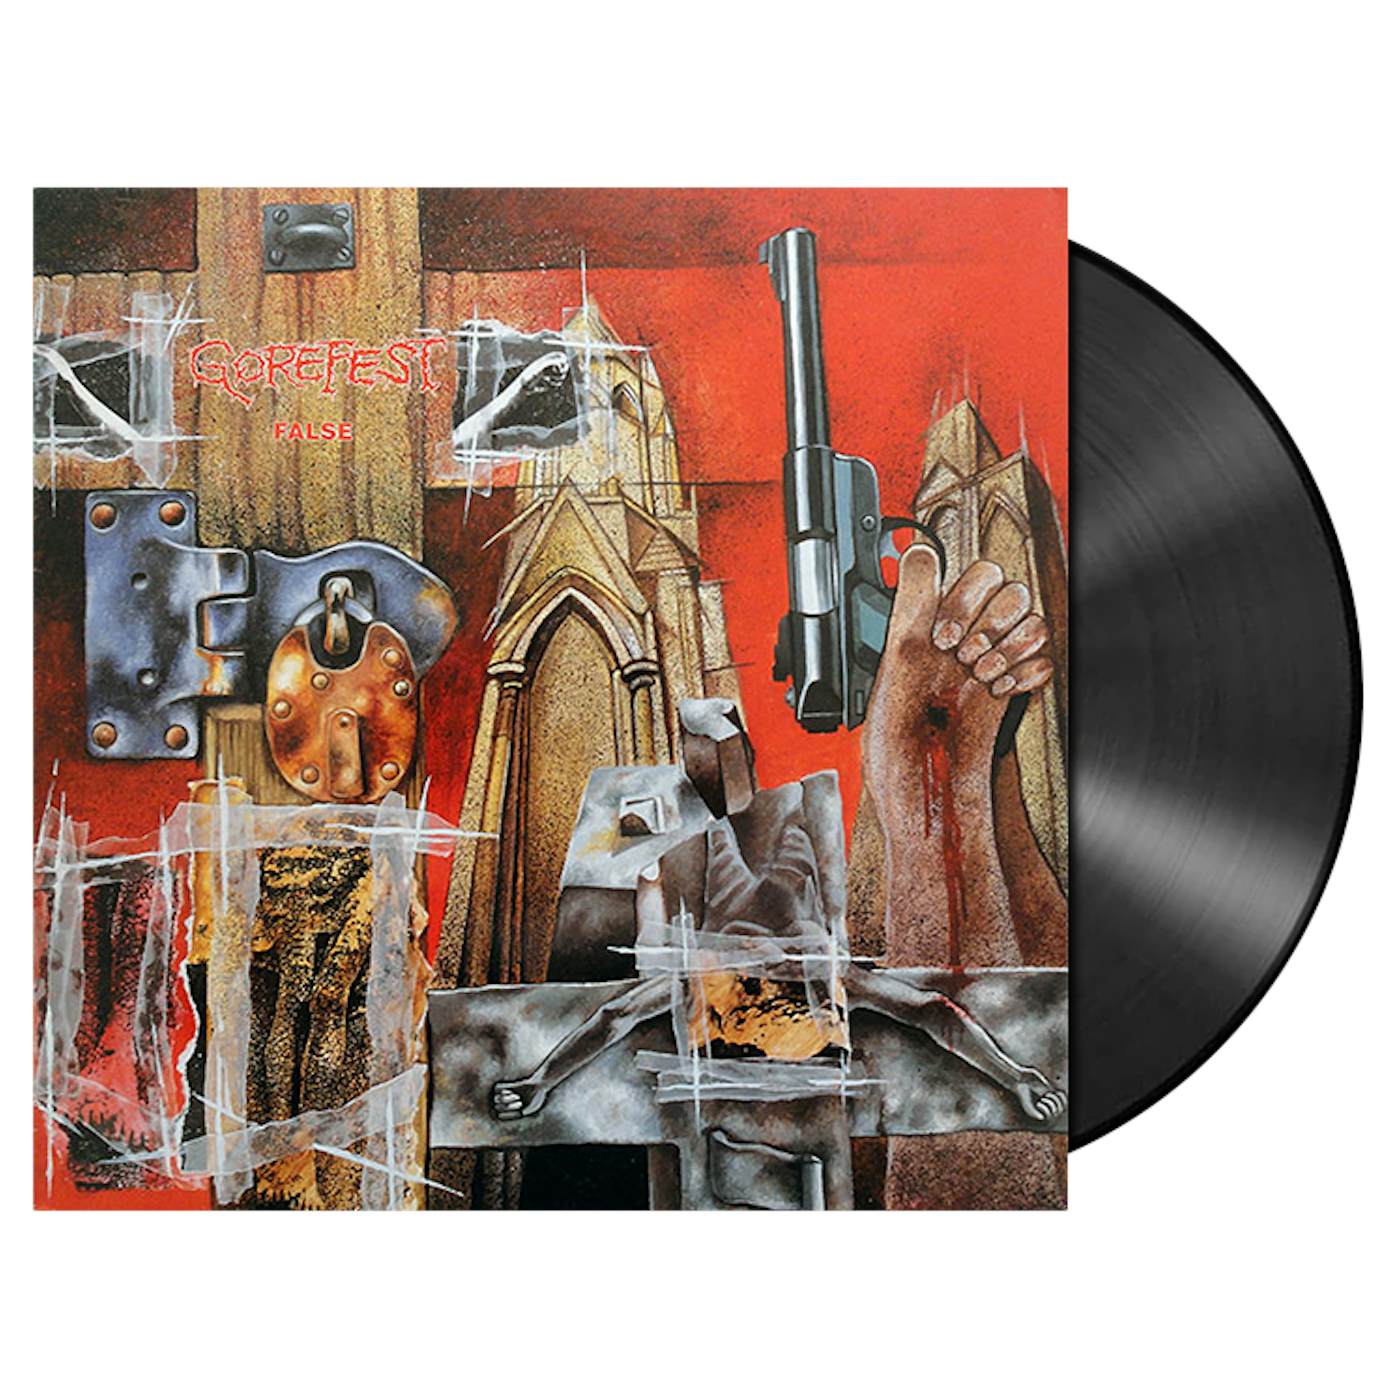 GOREFEST - 'False' LP (Vinyl)